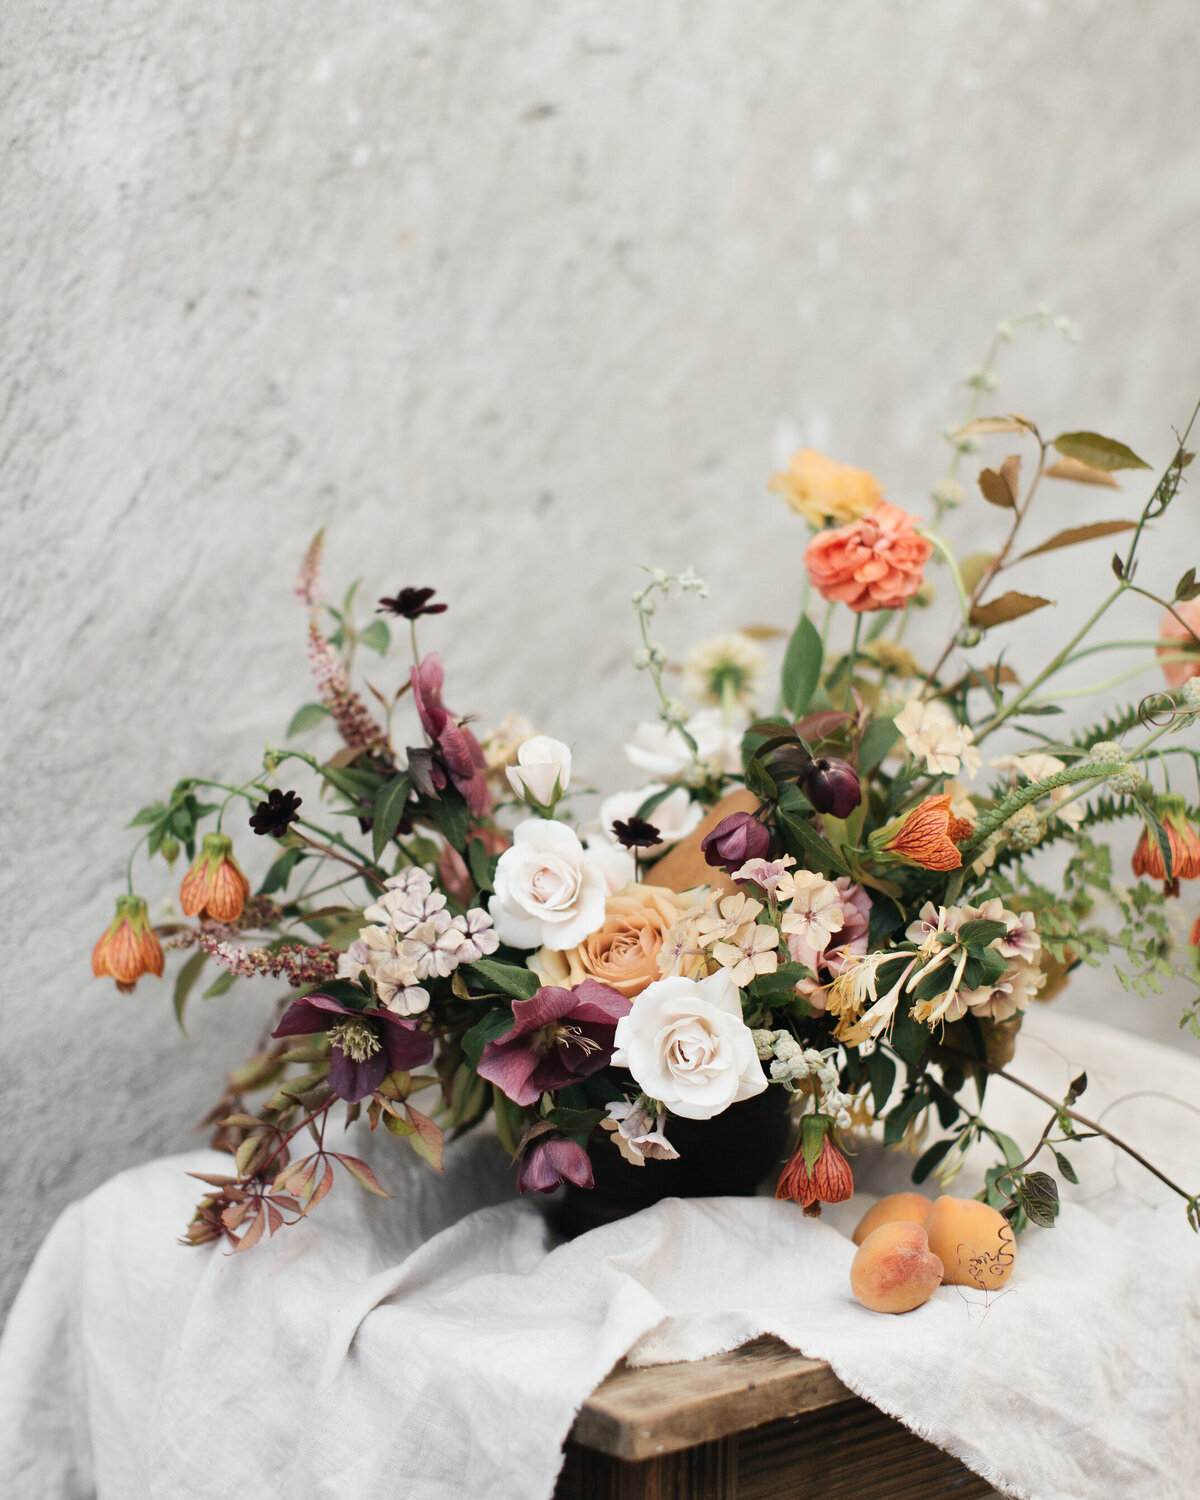 Atelier-Carmel-Wedding-Florist-GALLERY-Arrangements-7